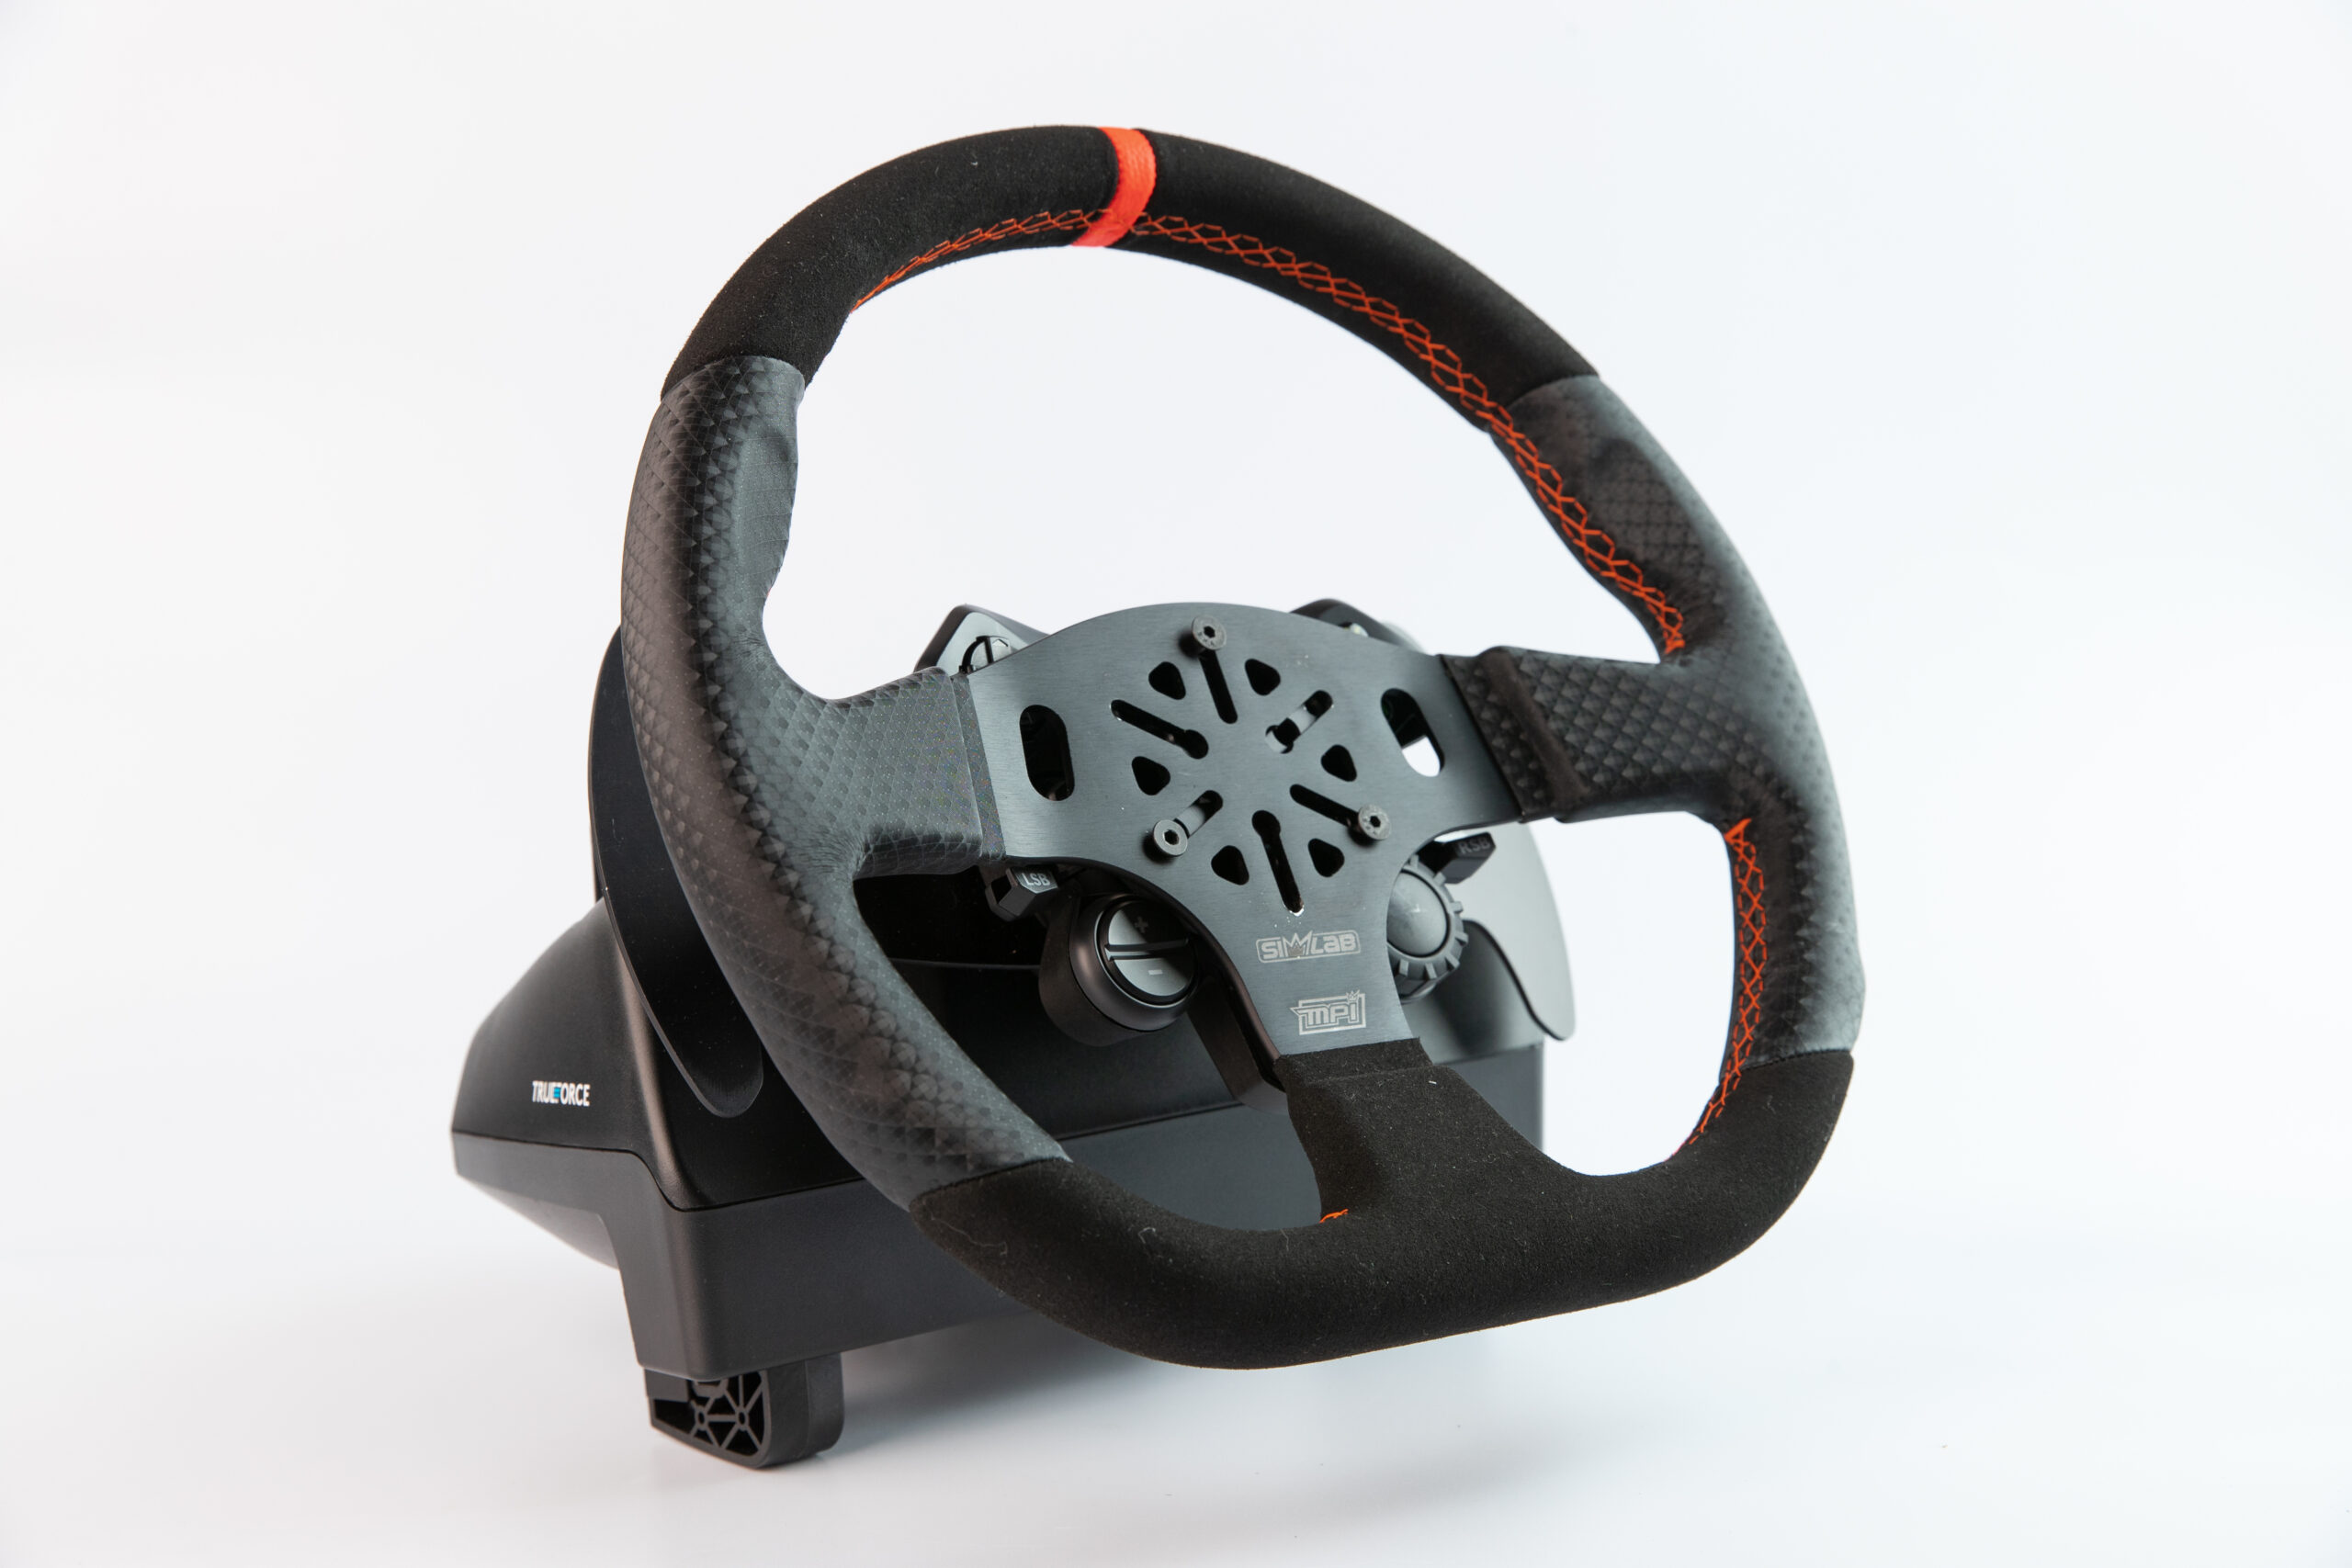 Logitech G27 Racing Wheel specifications